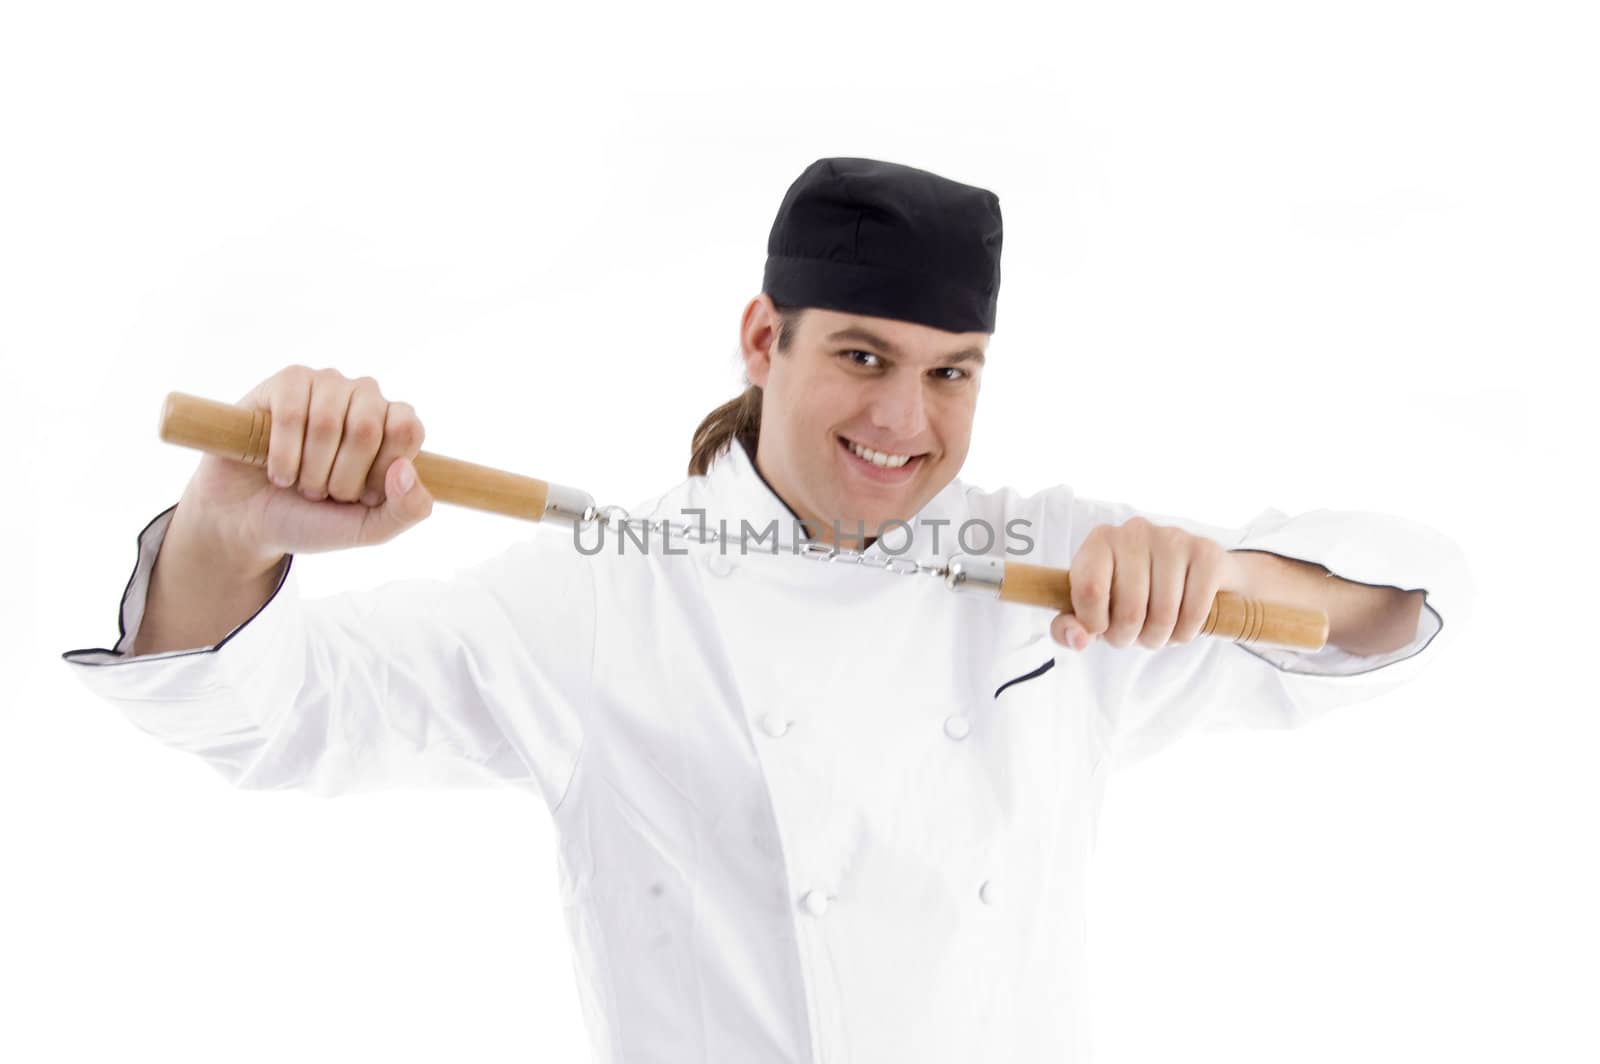 chef posing holding nunchaku by imagerymajestic